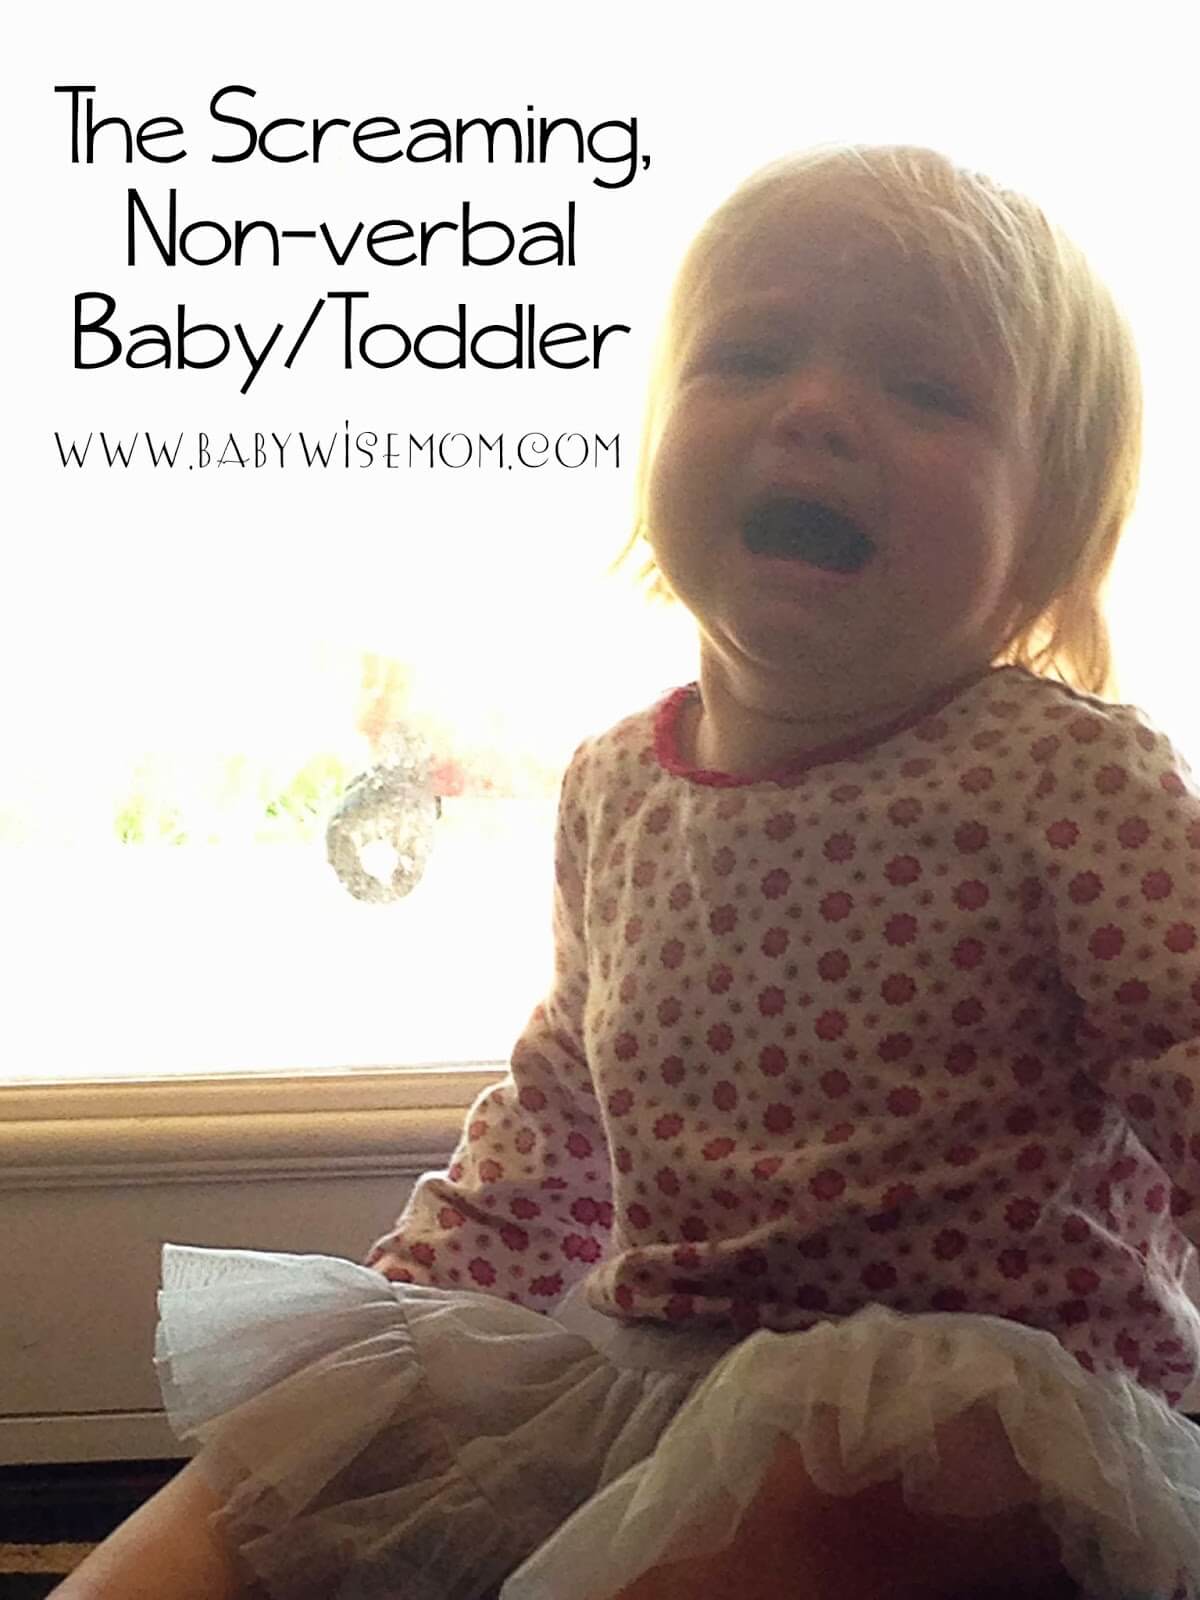 The Screaming Non-Verbal Baby/Toddler